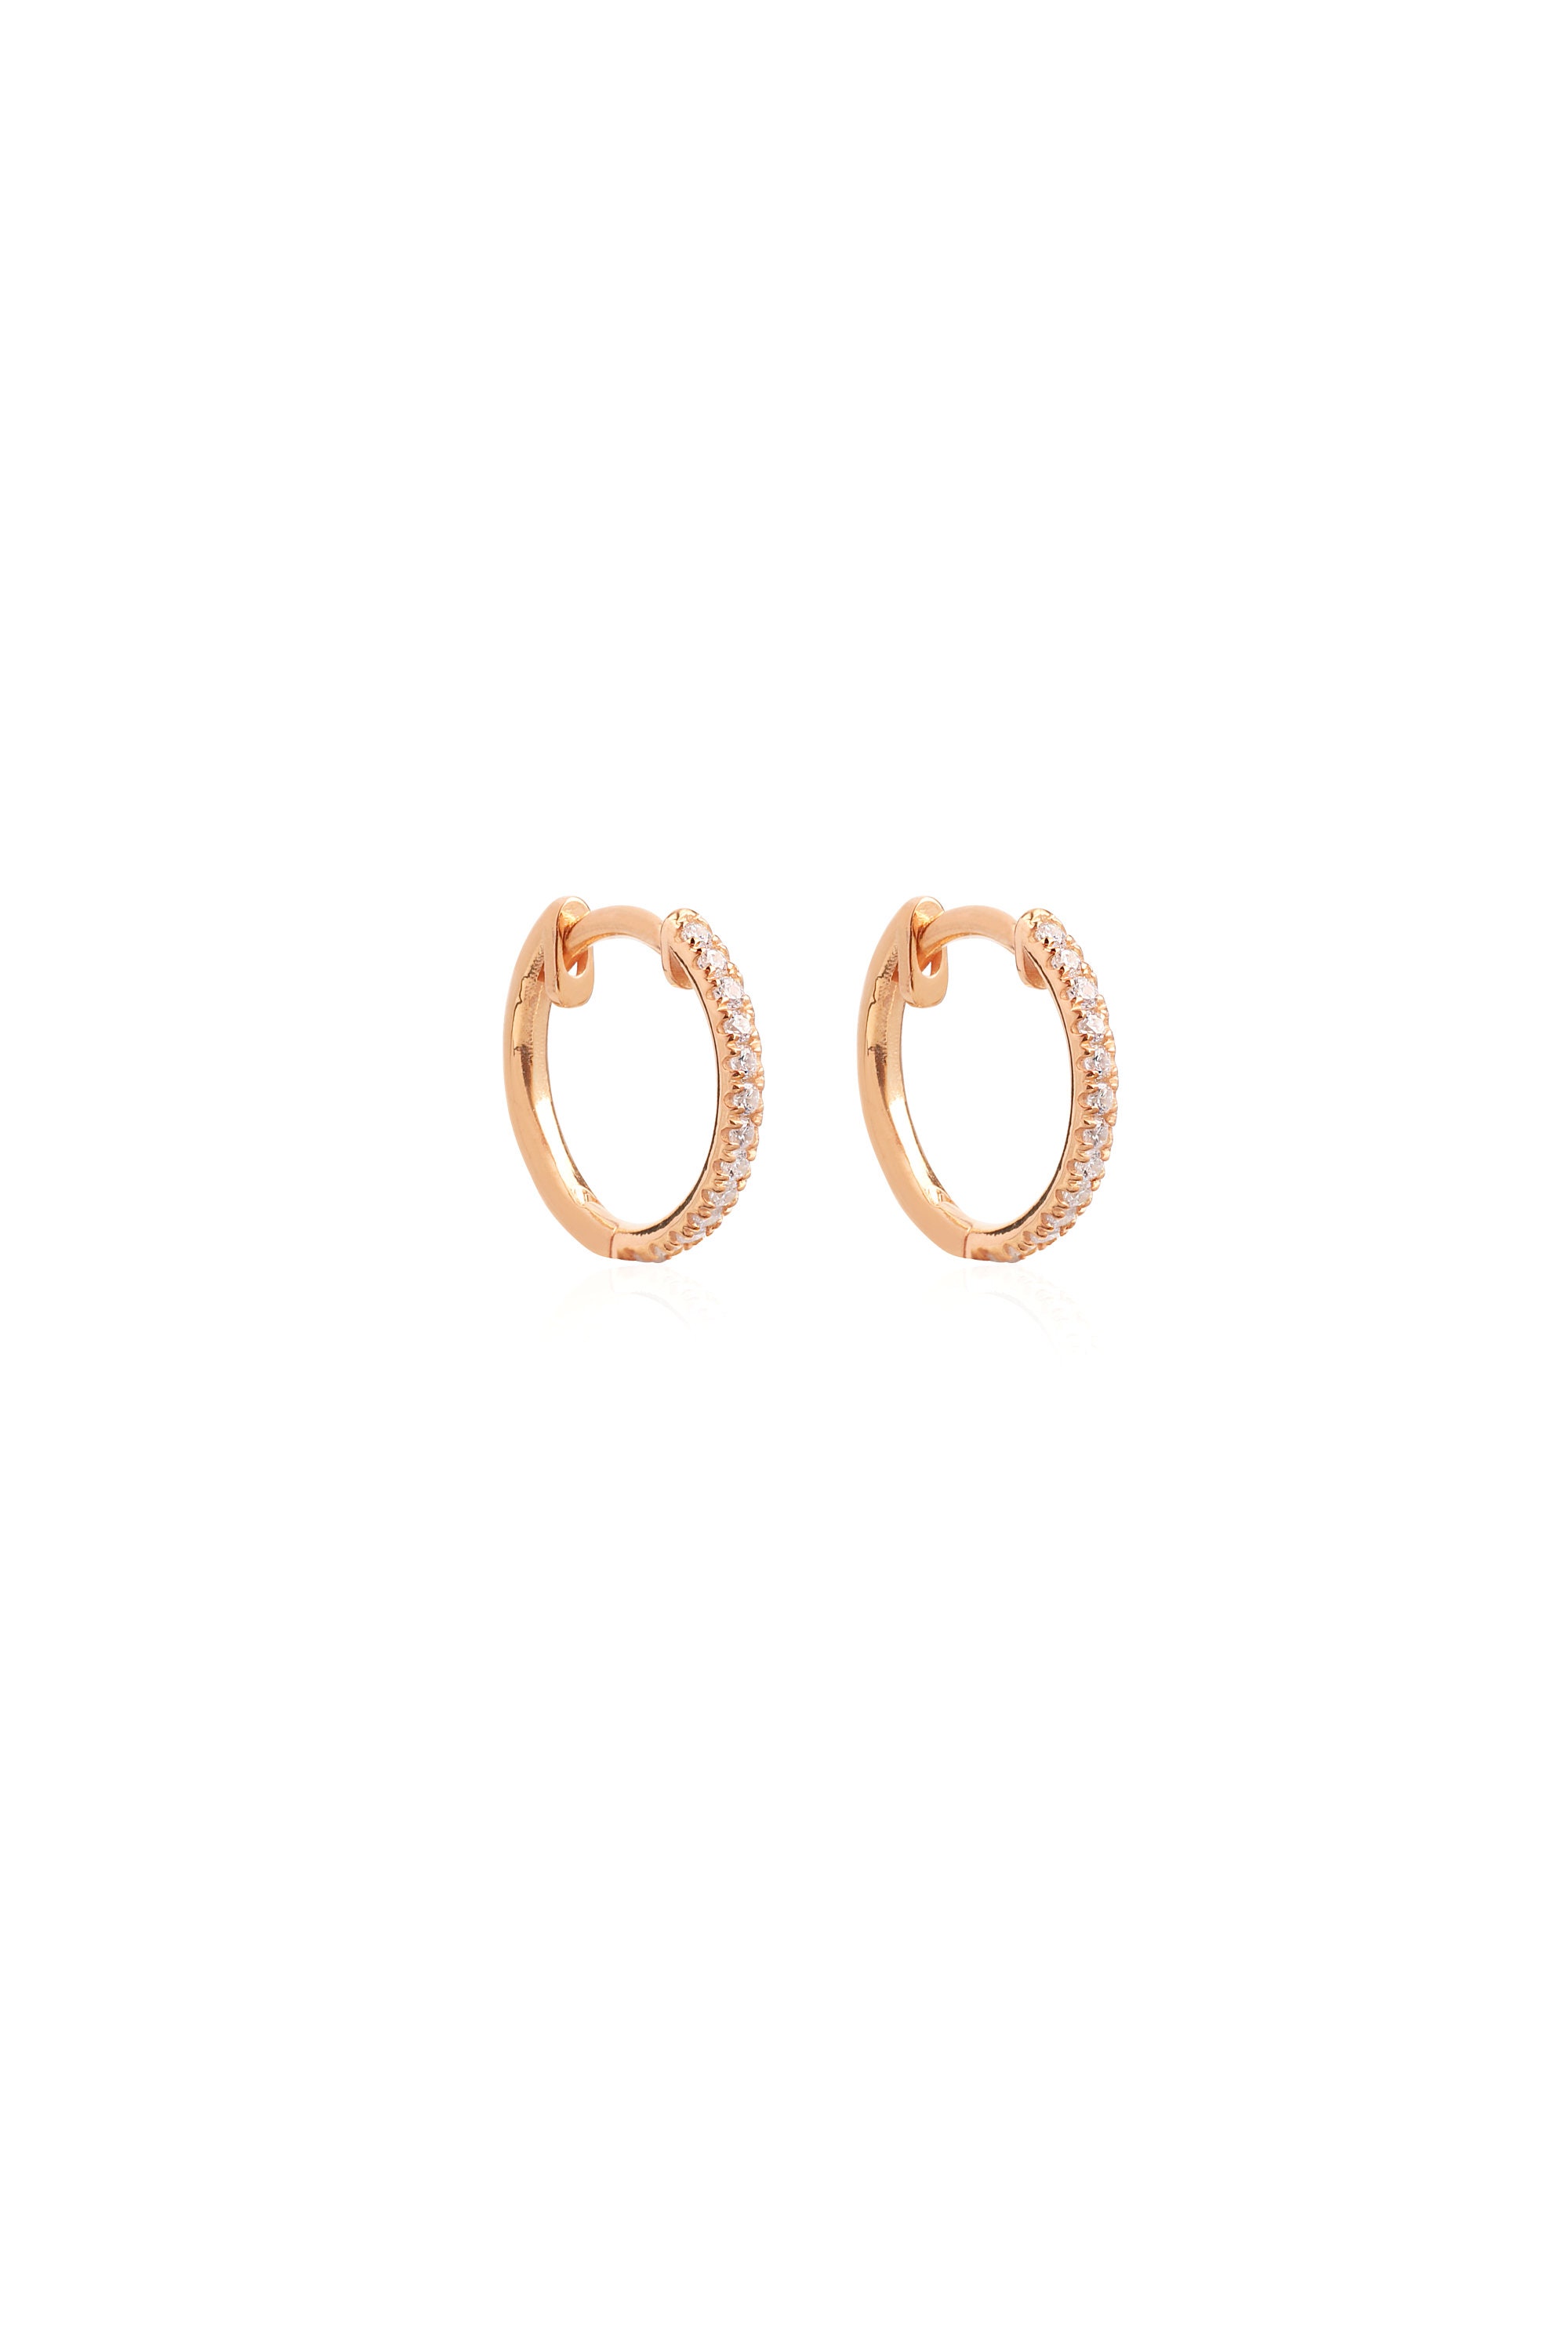 Dainty Natural Diamond Hoop Earring 14K Solid Gold Earrings | Etsy